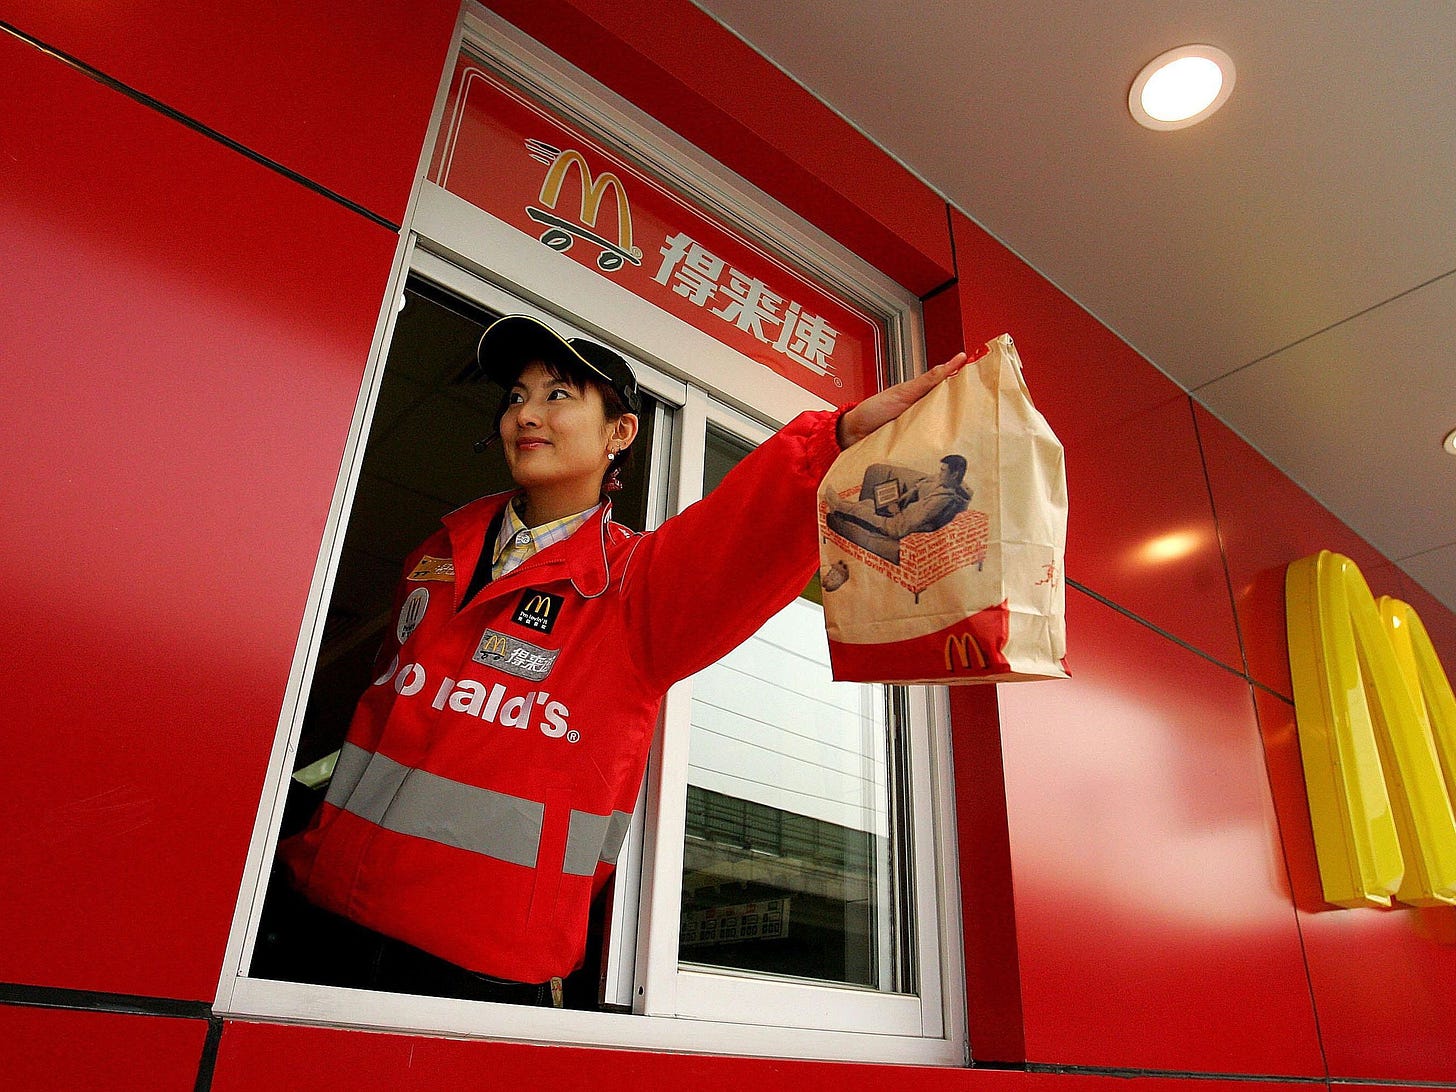 Understanding the Phenomenon of McDonaldization